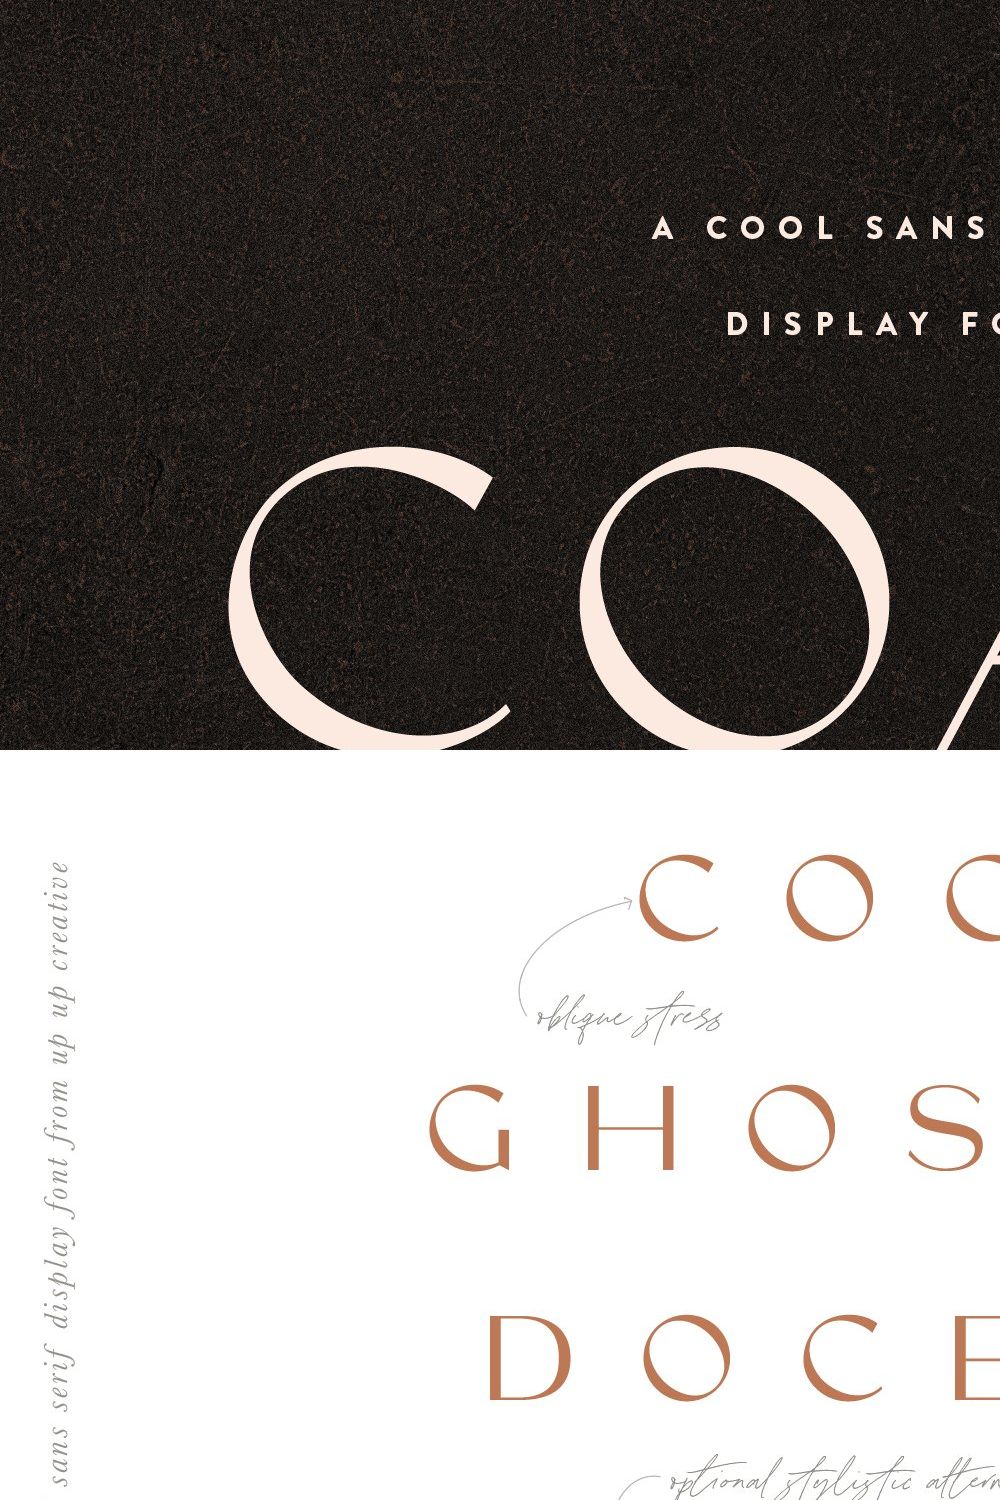 Coax, A Cool Sans Serif Display Font pinterest preview image.